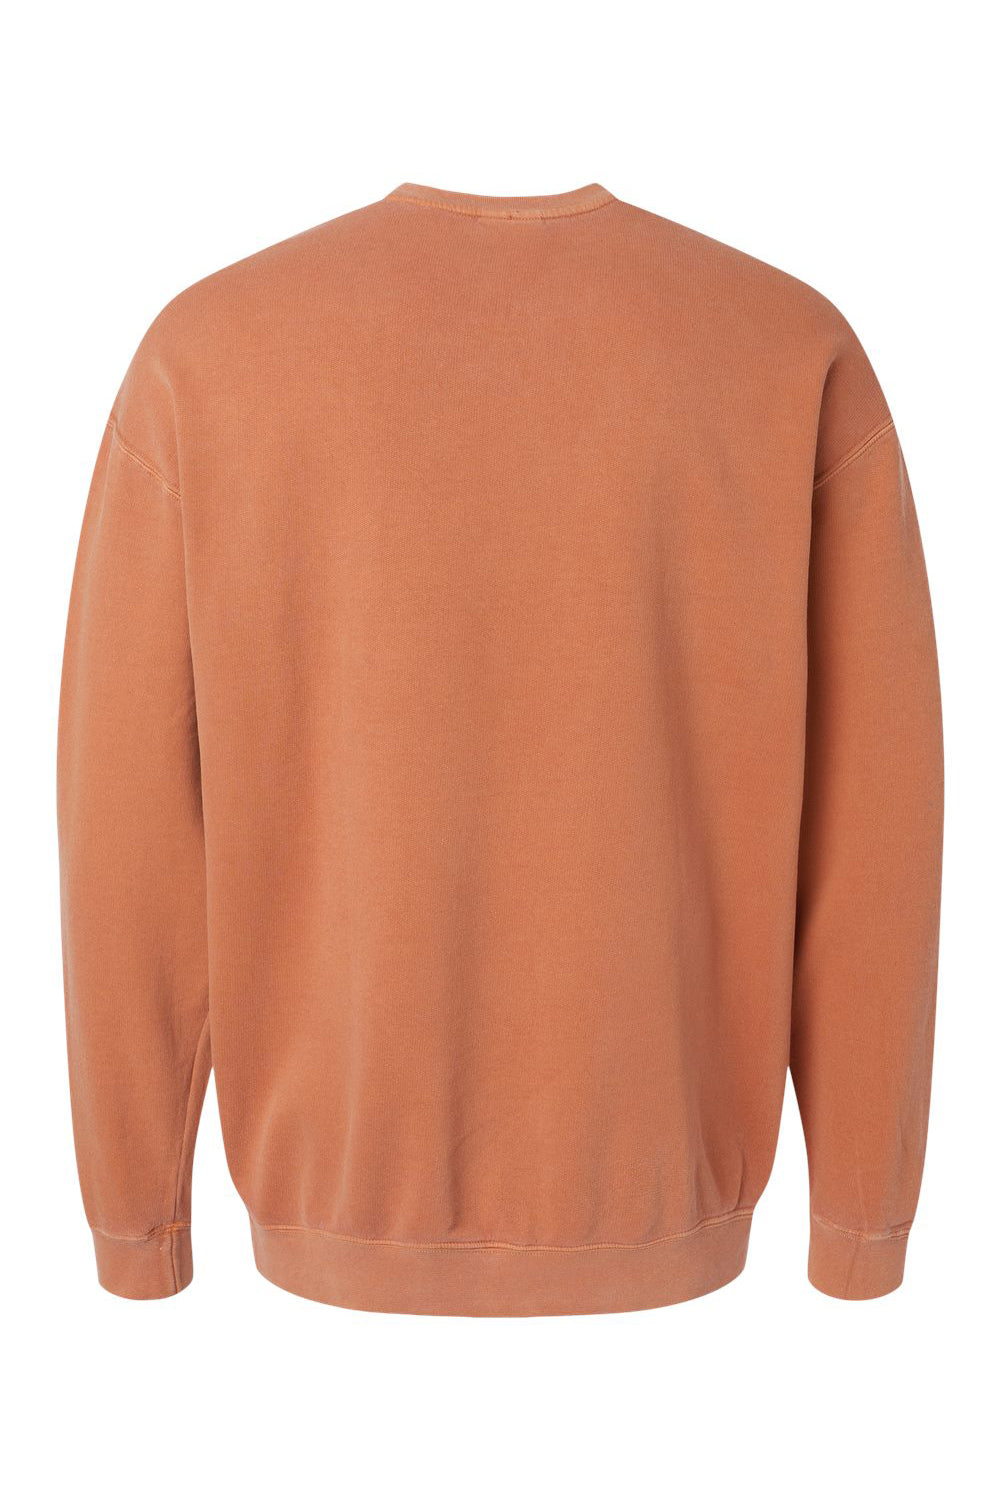 Comfort Colors 1466 Mens Garment Dyed Fleece Crewneck Sweatshirt Yam Orange Flat Back